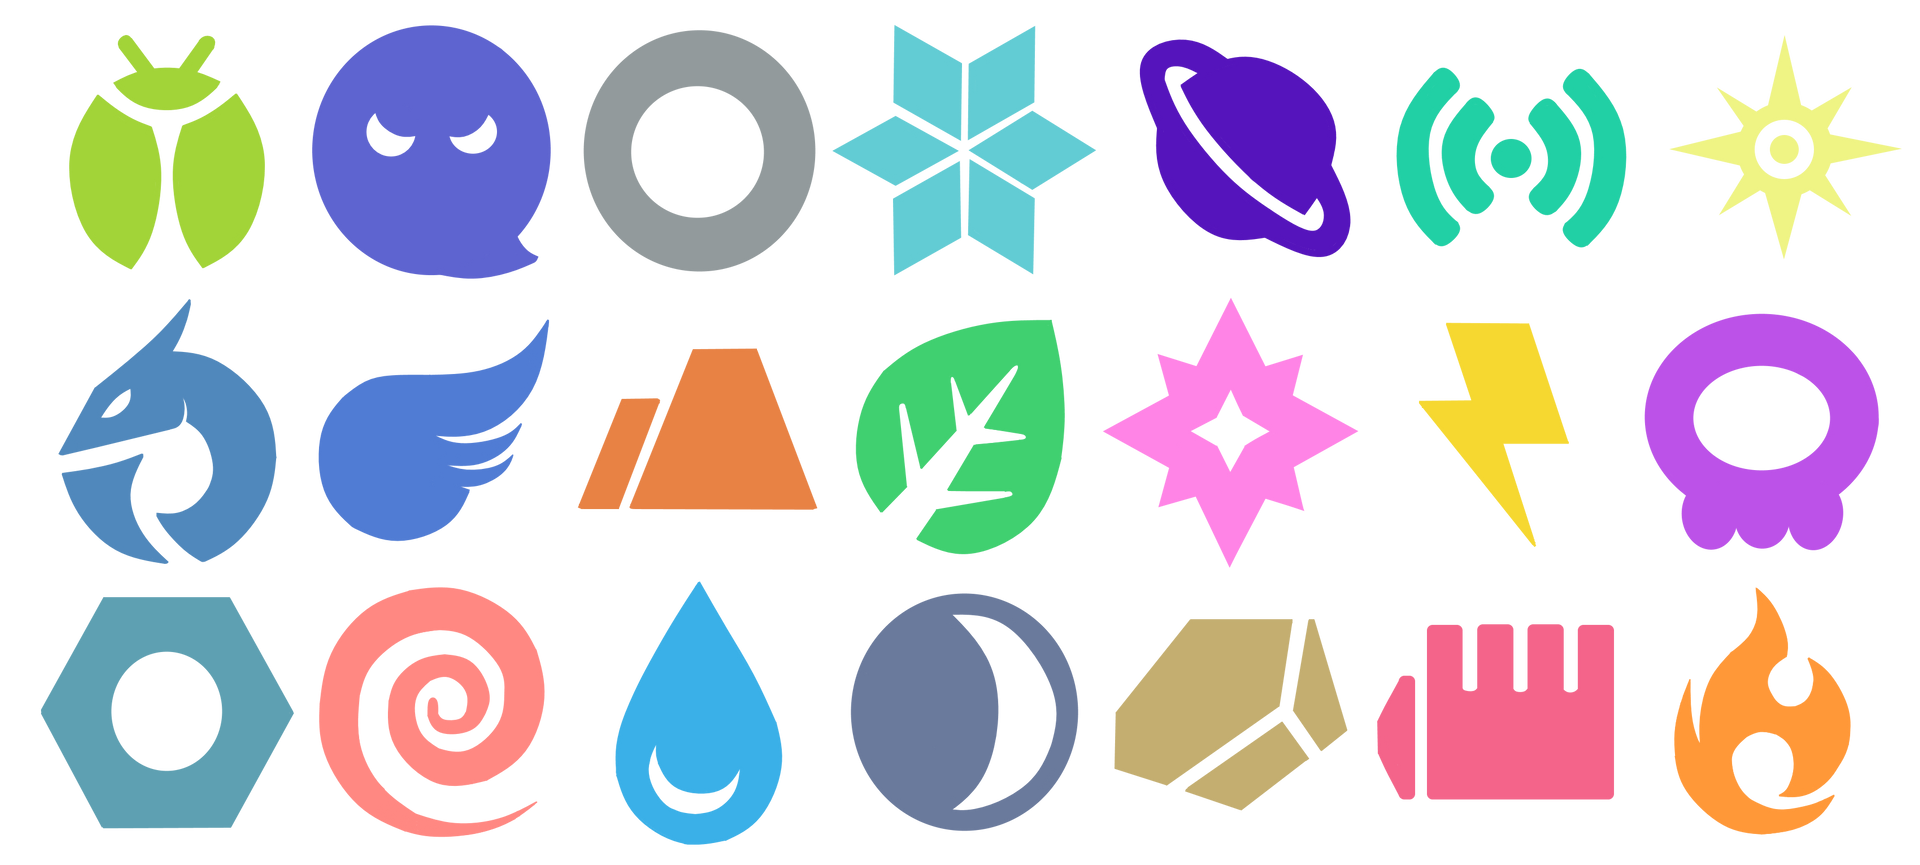 Pokemon Type Symbols by Falke2009 on DeviantArt